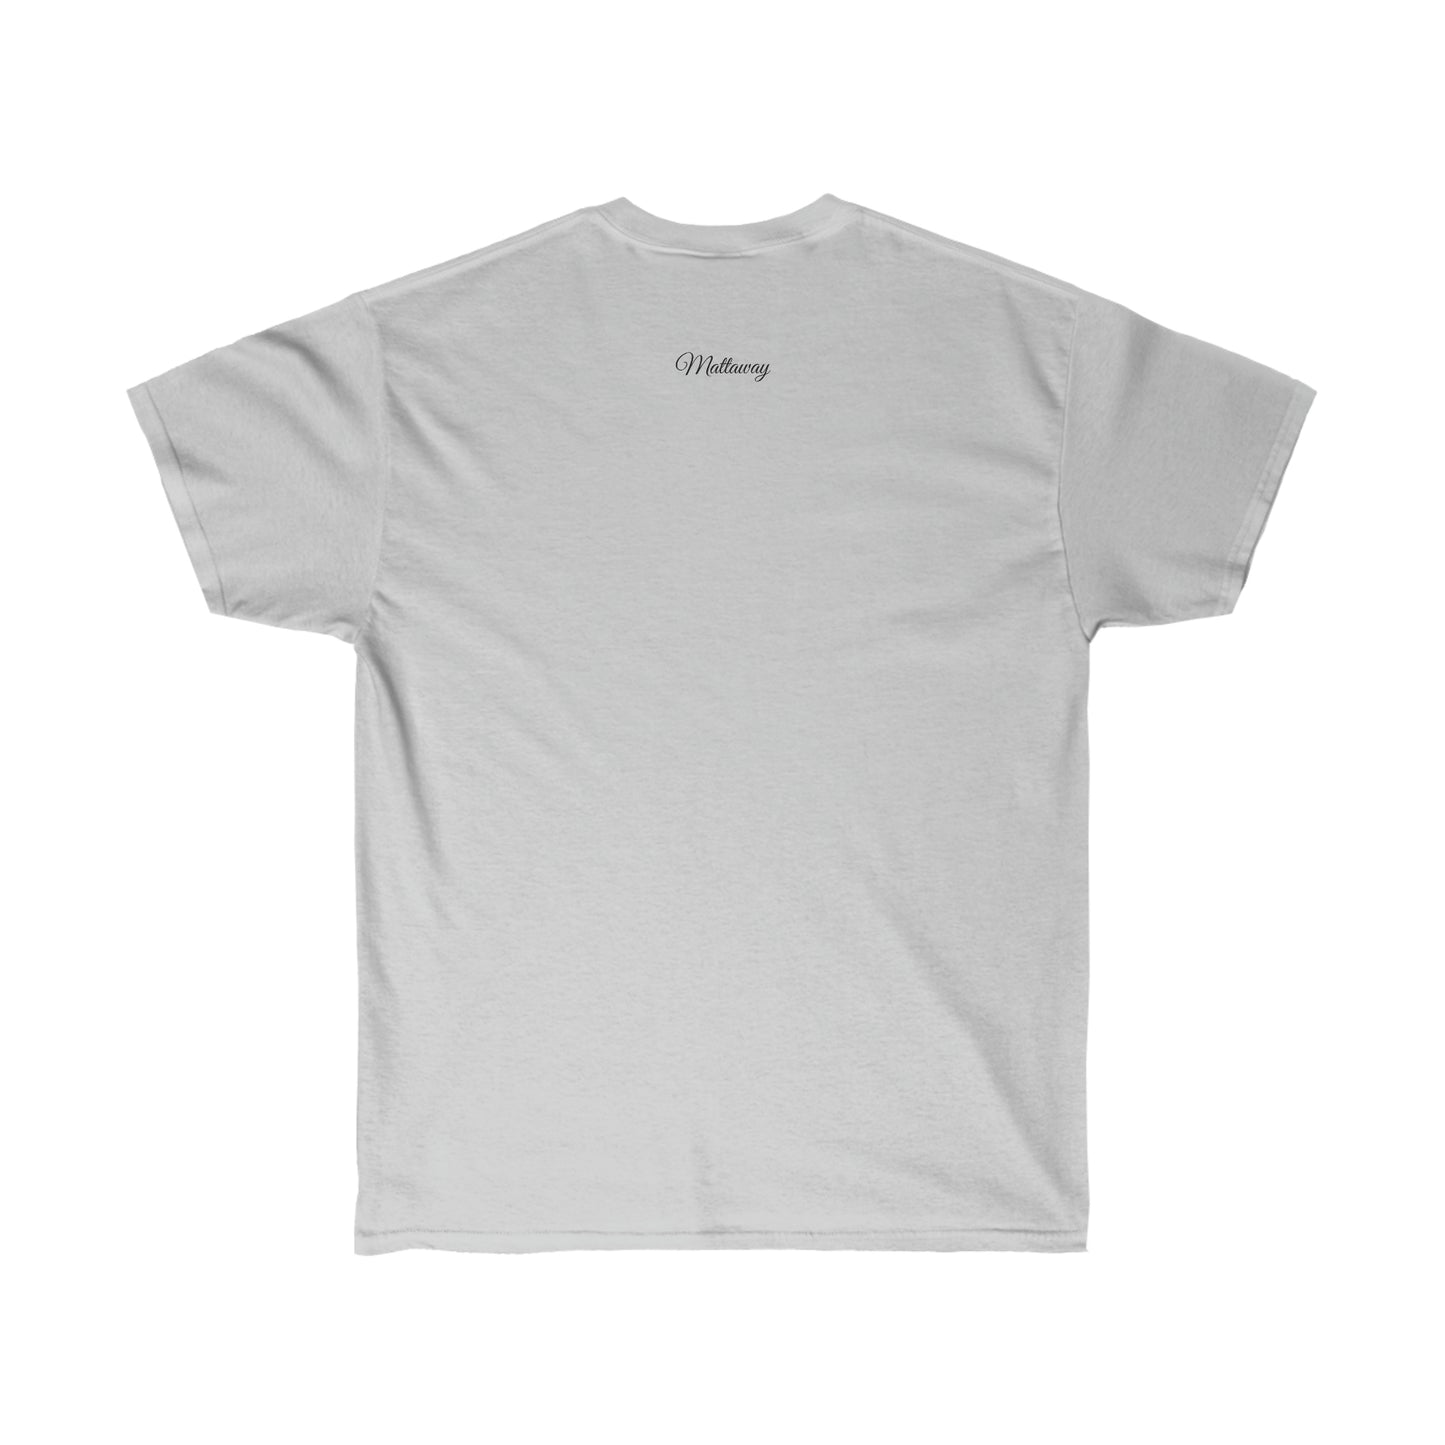 EARTH GEODE 100102 - Camiseta unisex de ultra algodón